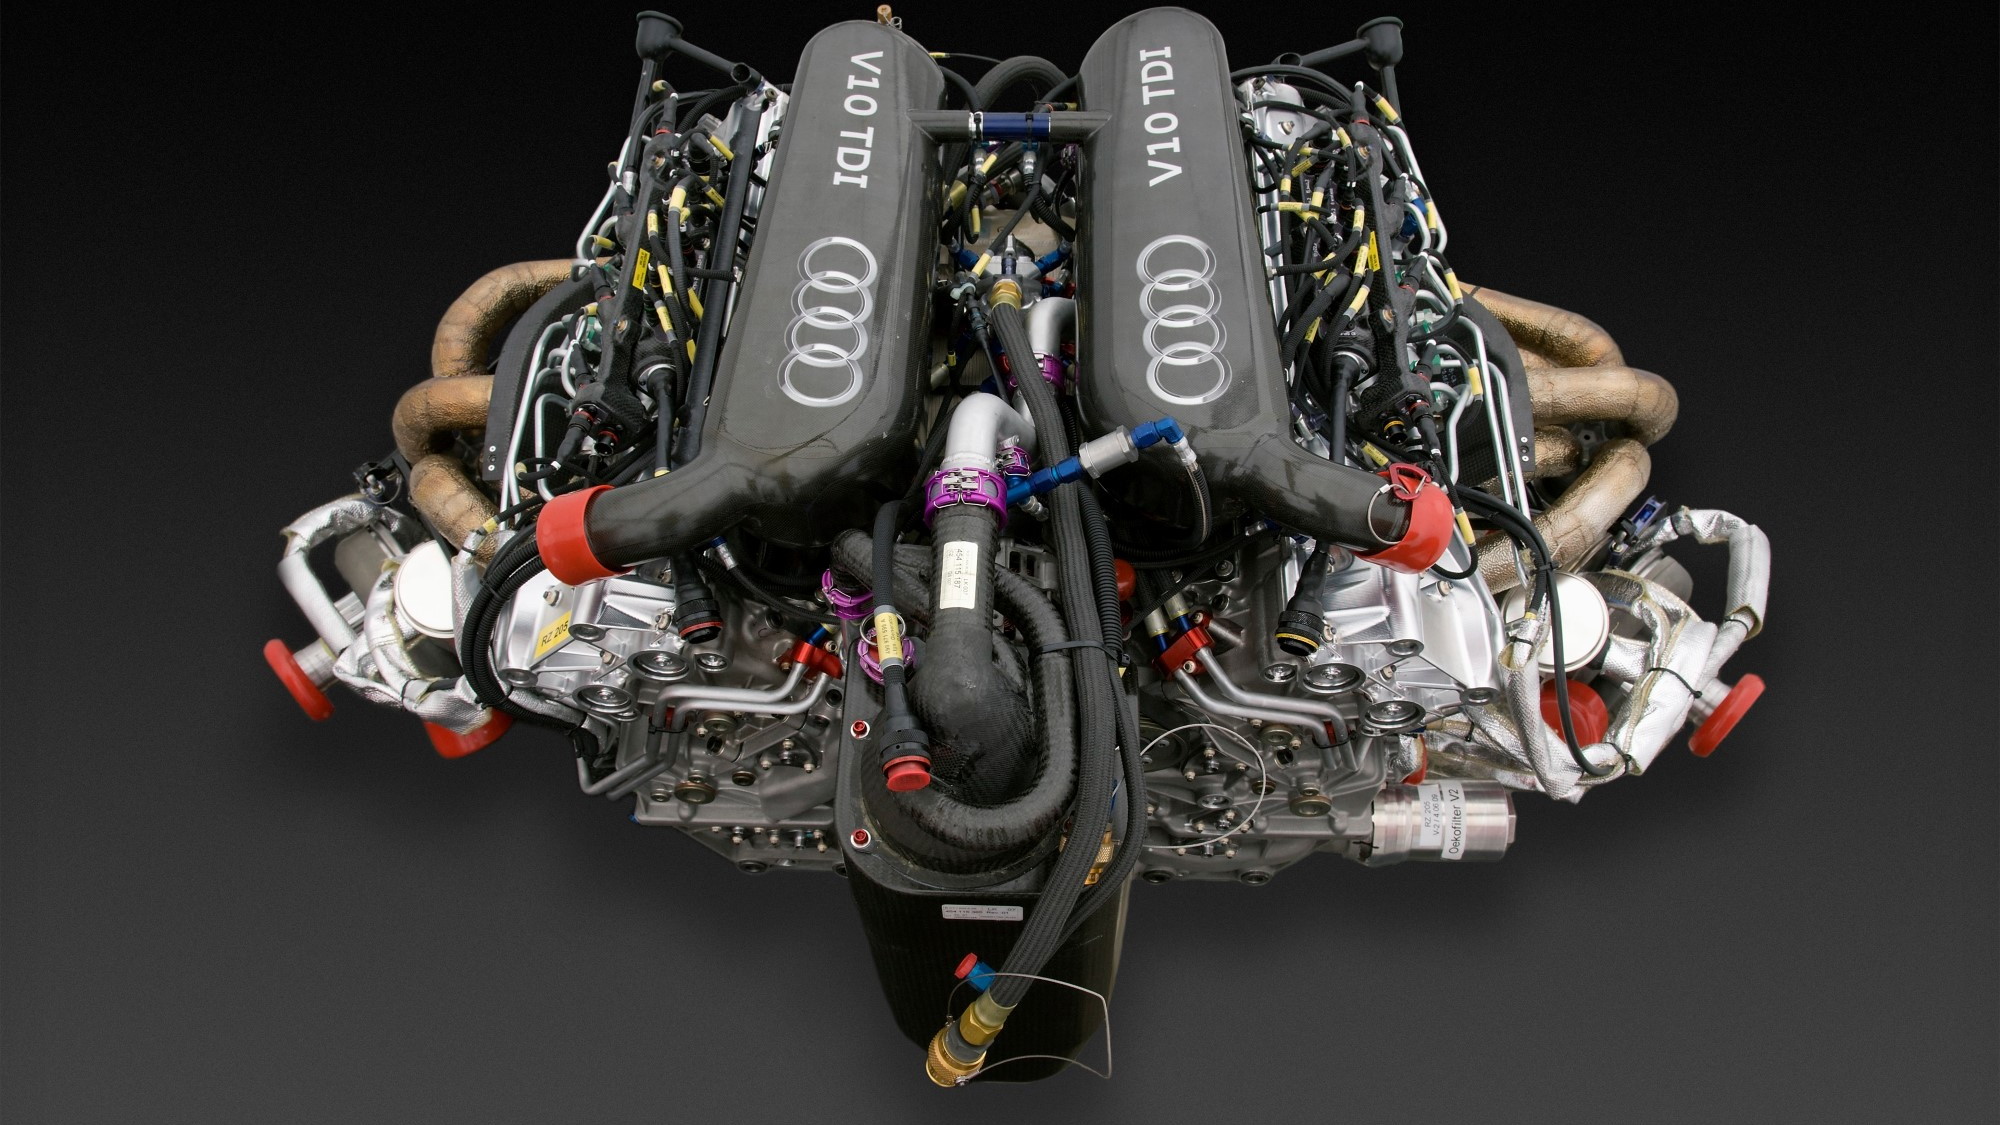 Audi racing yields production car technogloy benefits